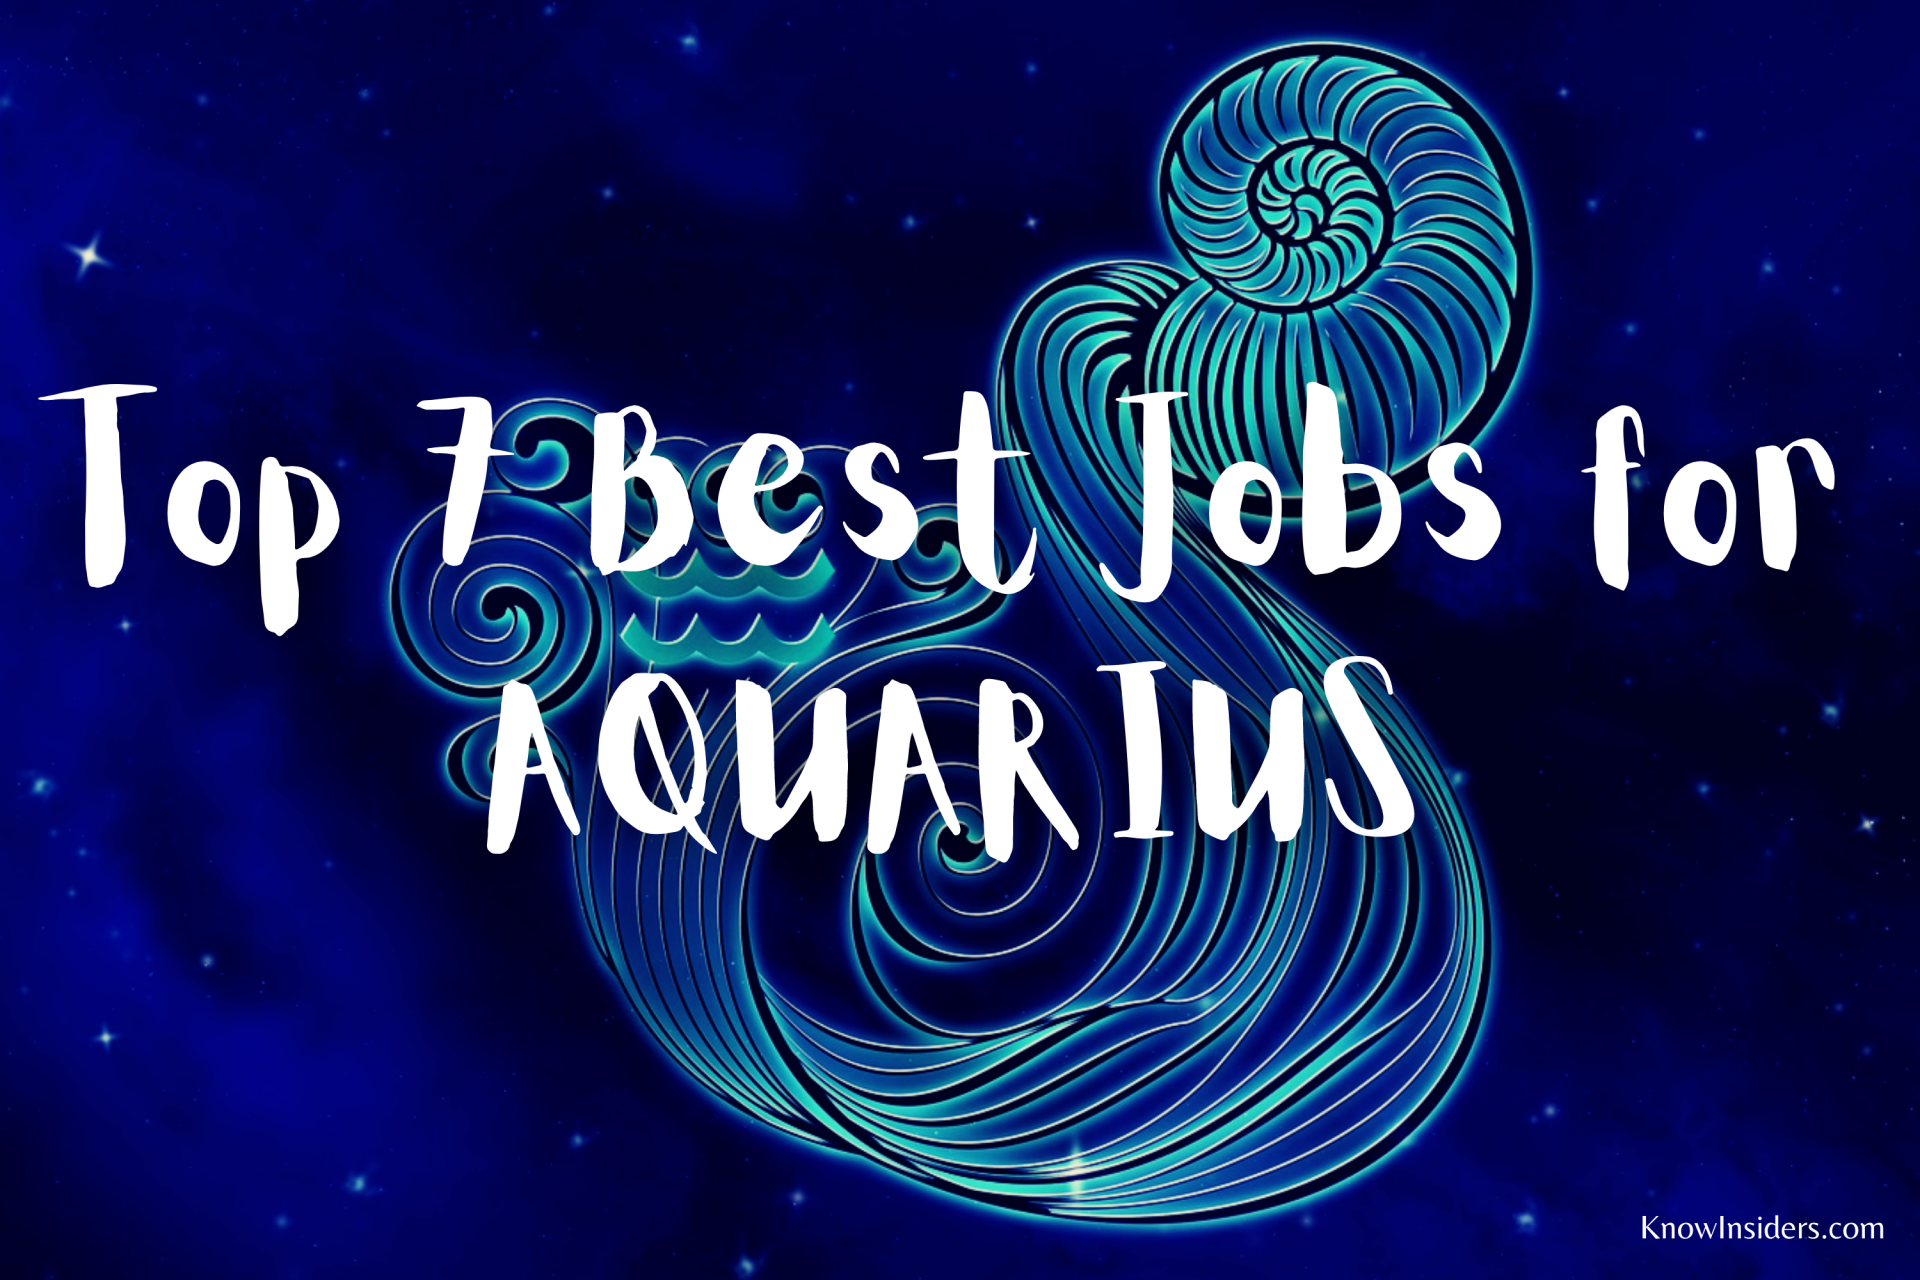 Top 7 Best Jobs for AQUARIUS - Career Guide Horoscope